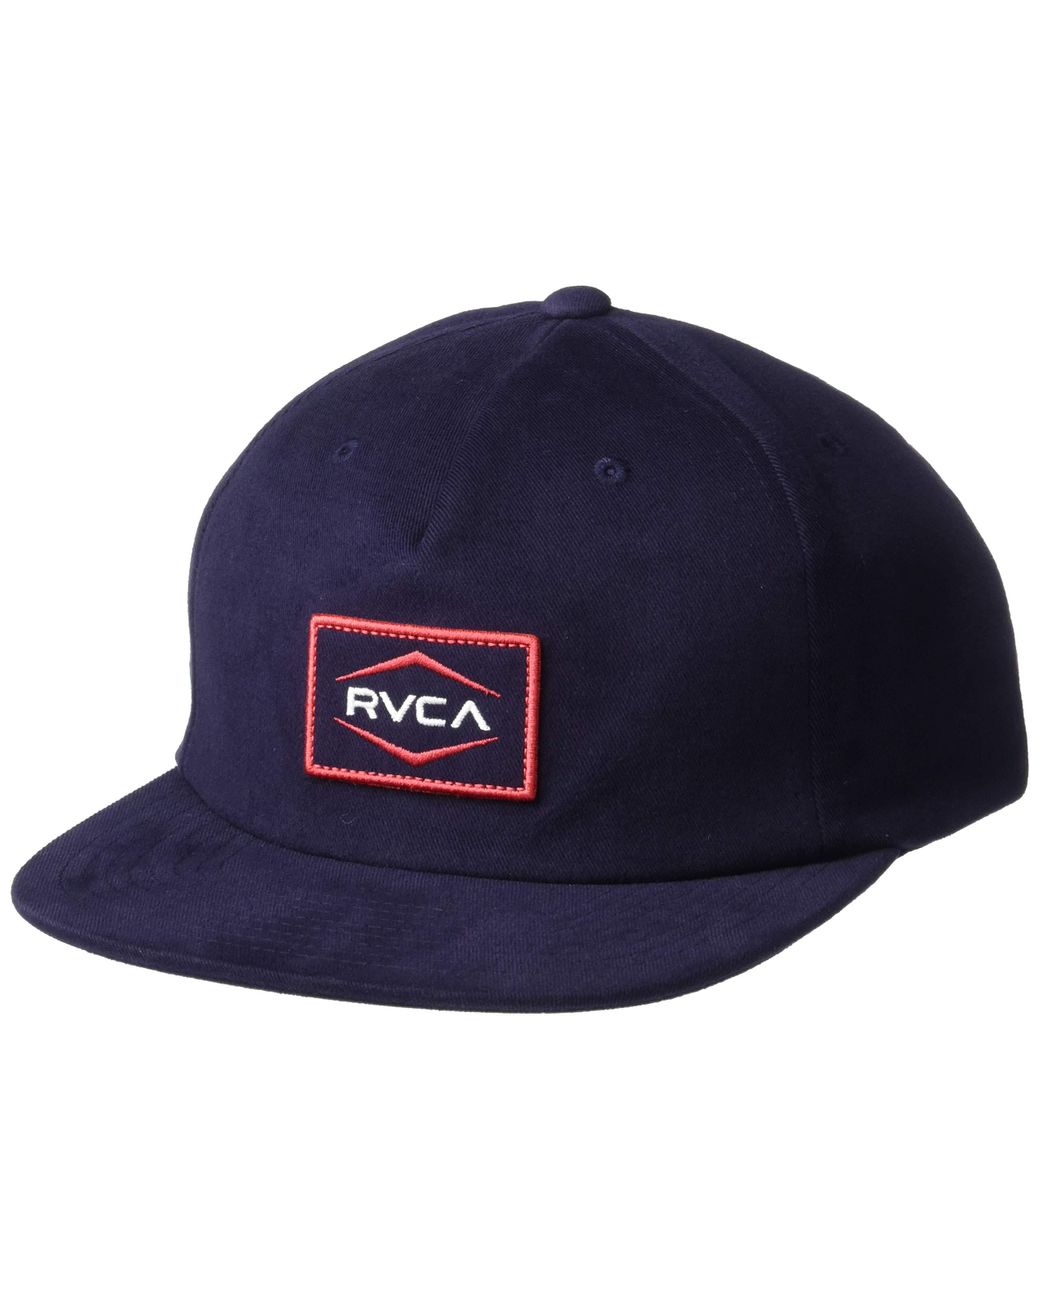 RVCA Pints Snapback Hat